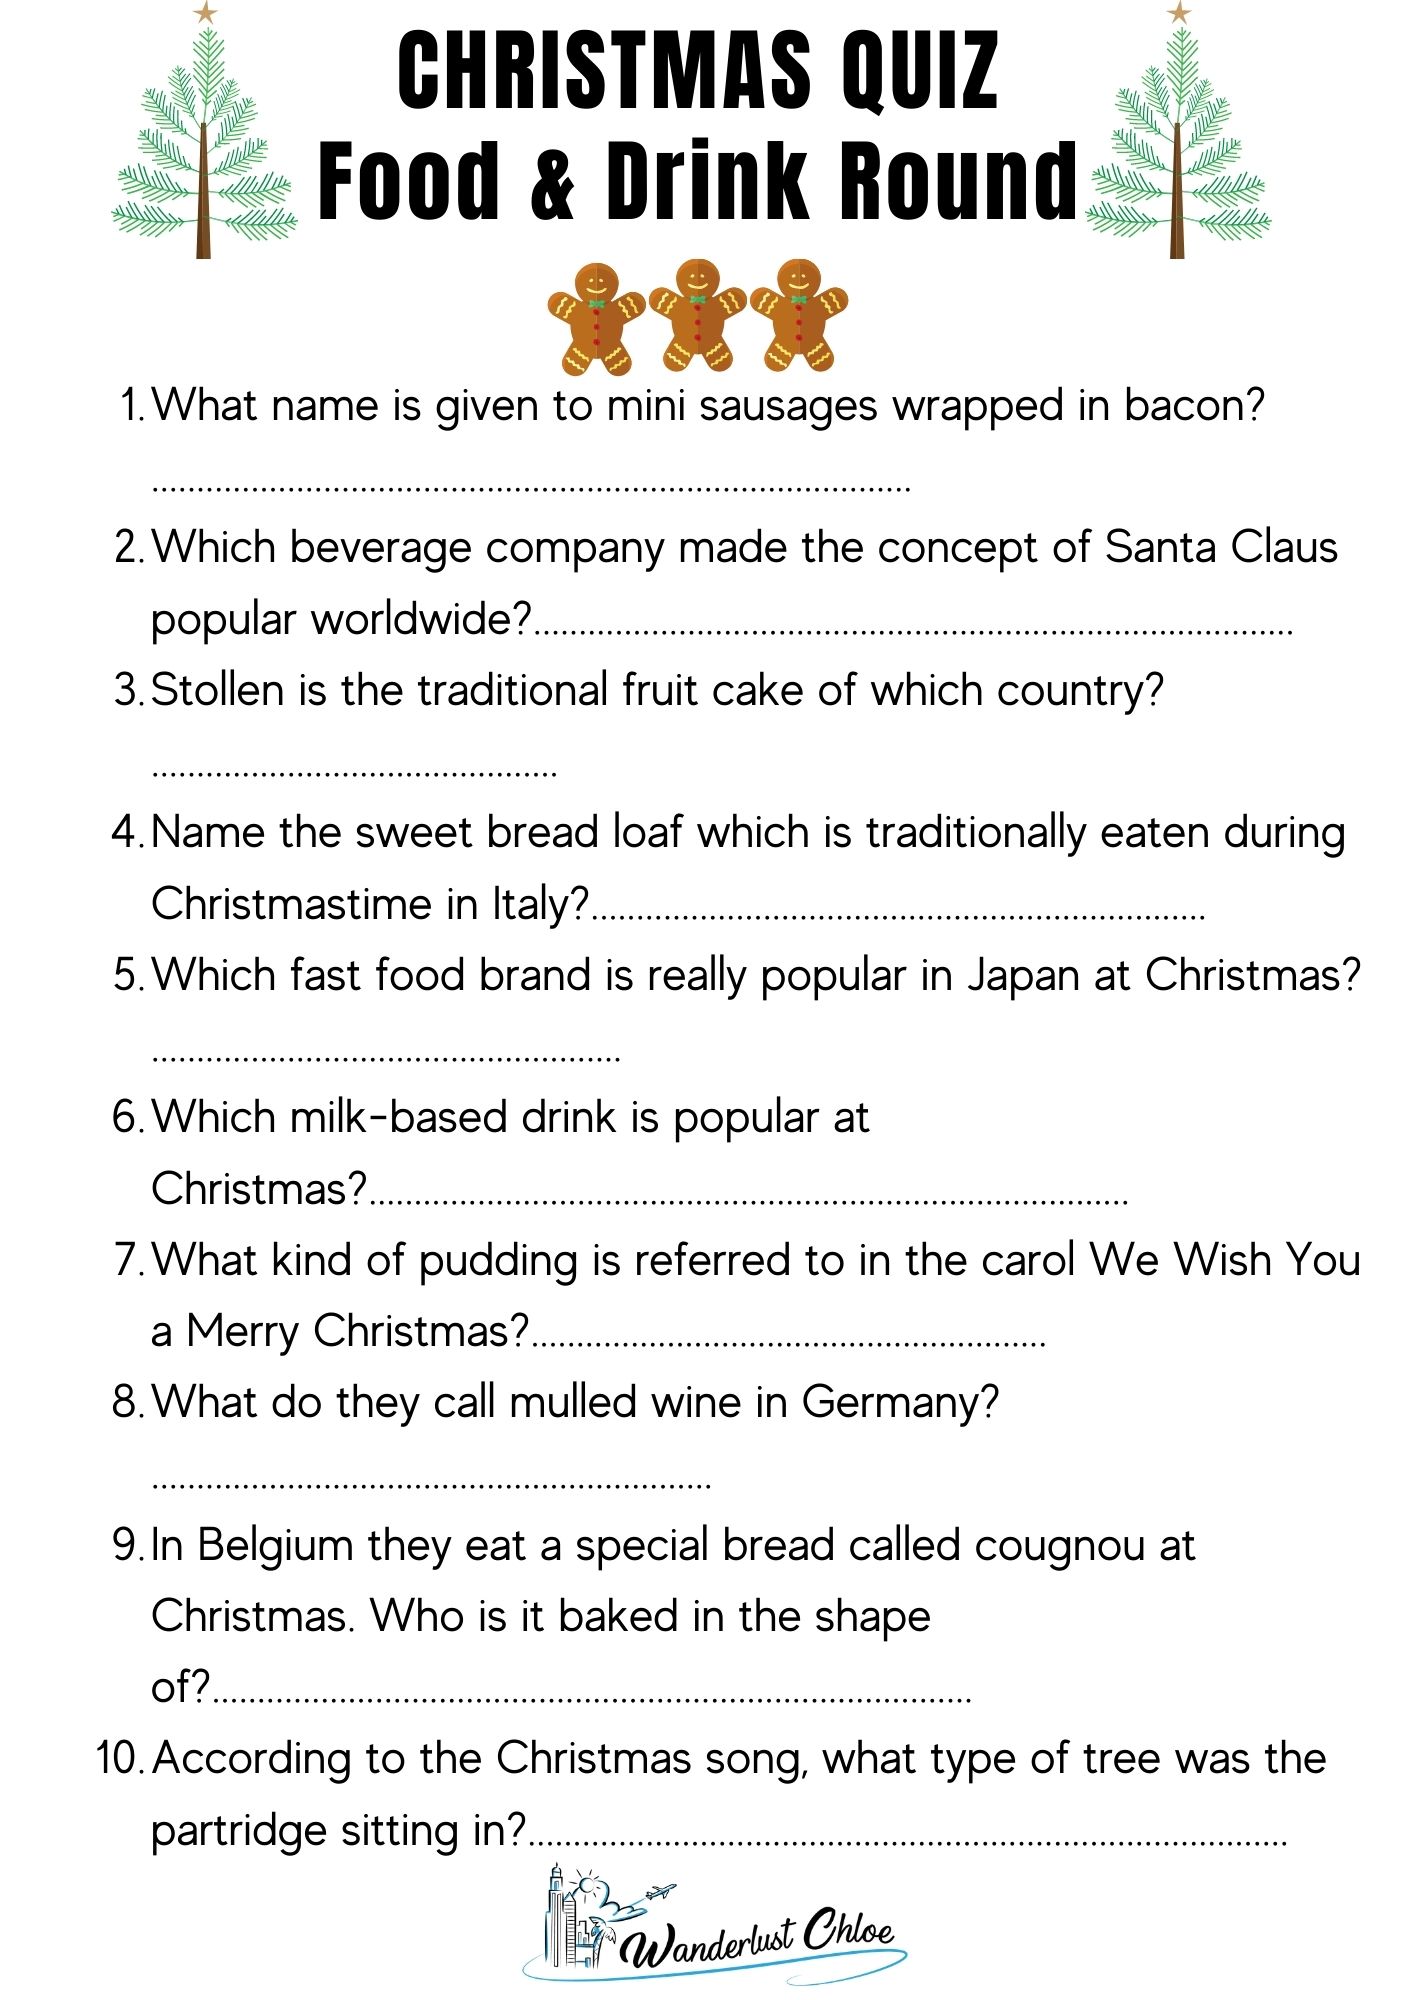 Printable Christmas Quiz Questions - Food & Drink